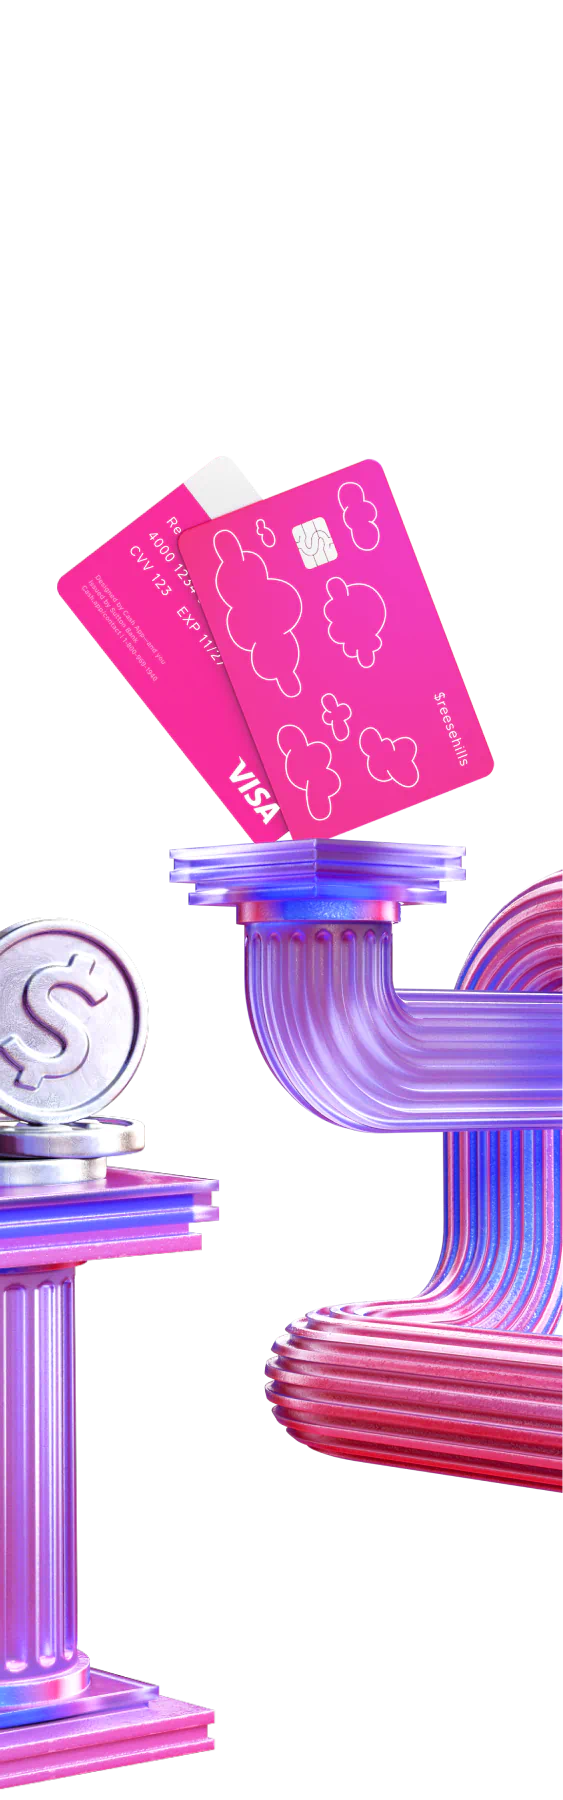 Cash App Intros 'Pink Drop' Clothing Line